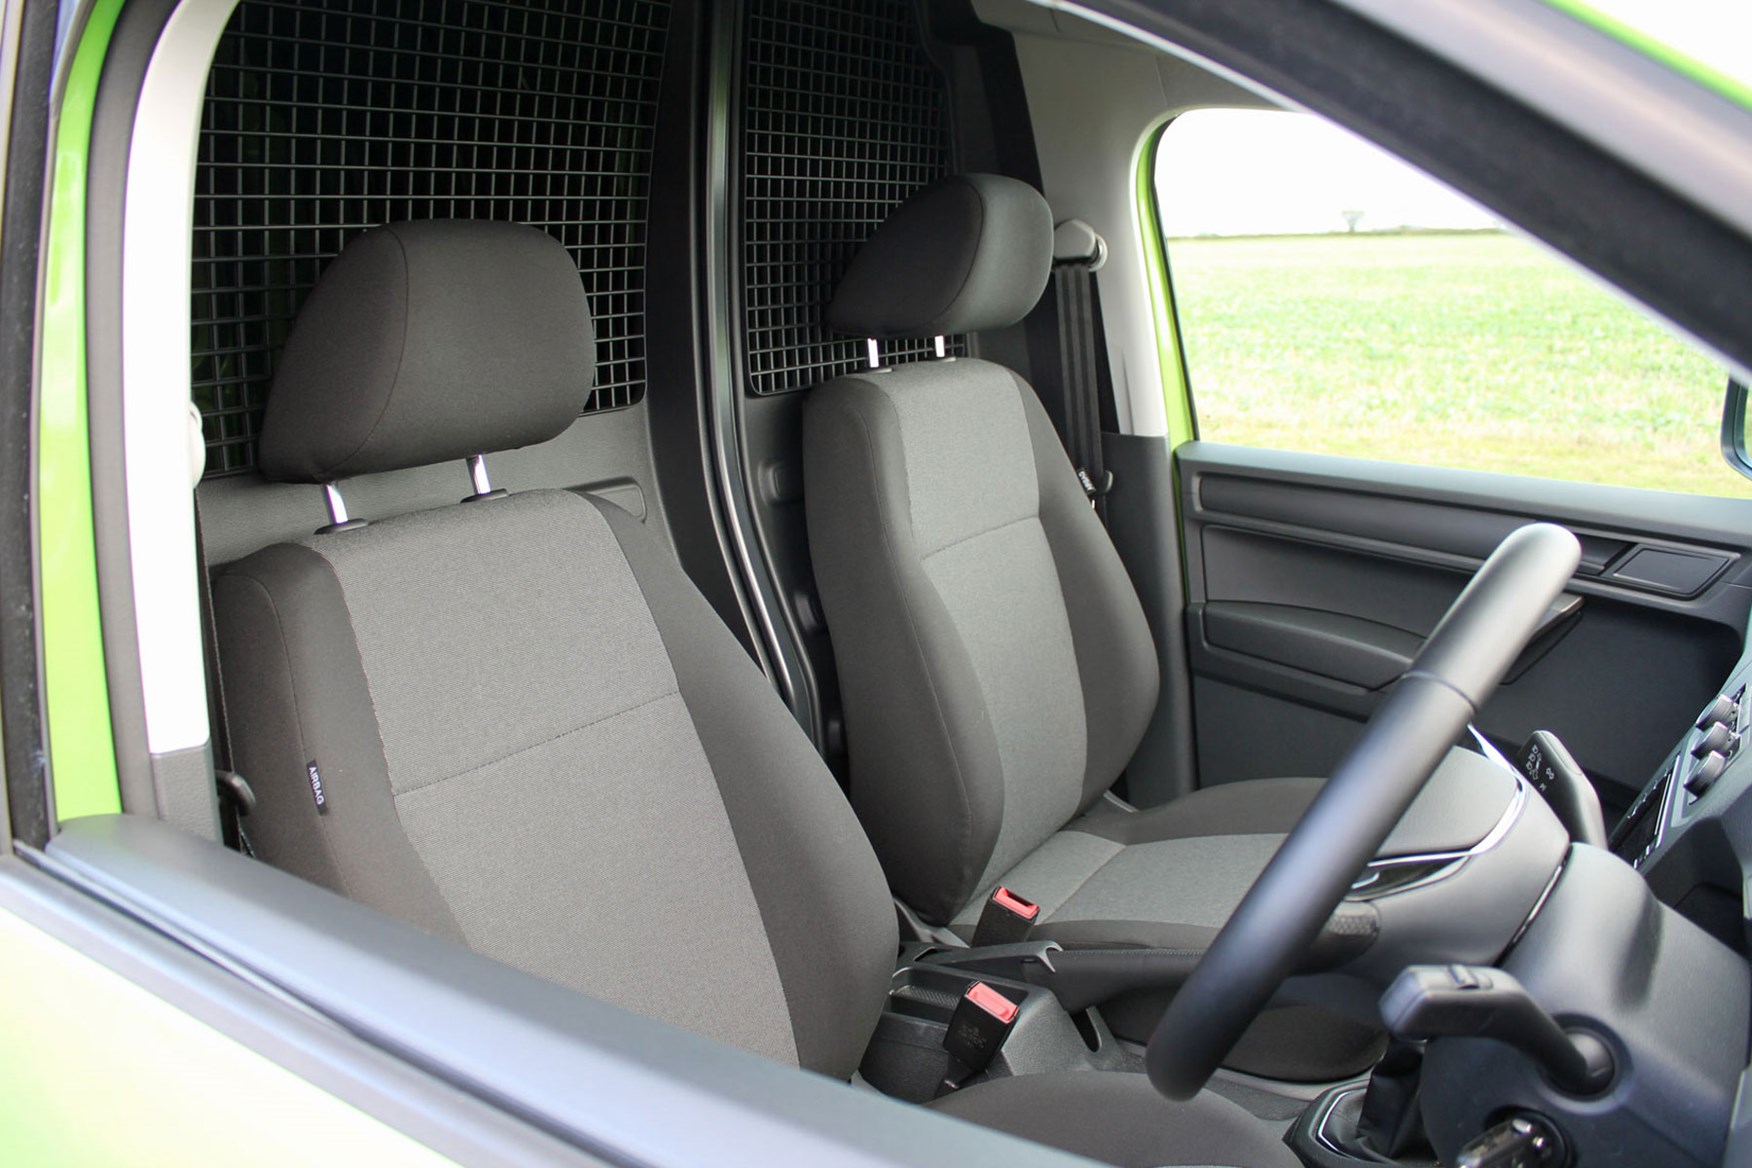 VW Caddy 1.0-litre TSI 102 review - seats, 2017